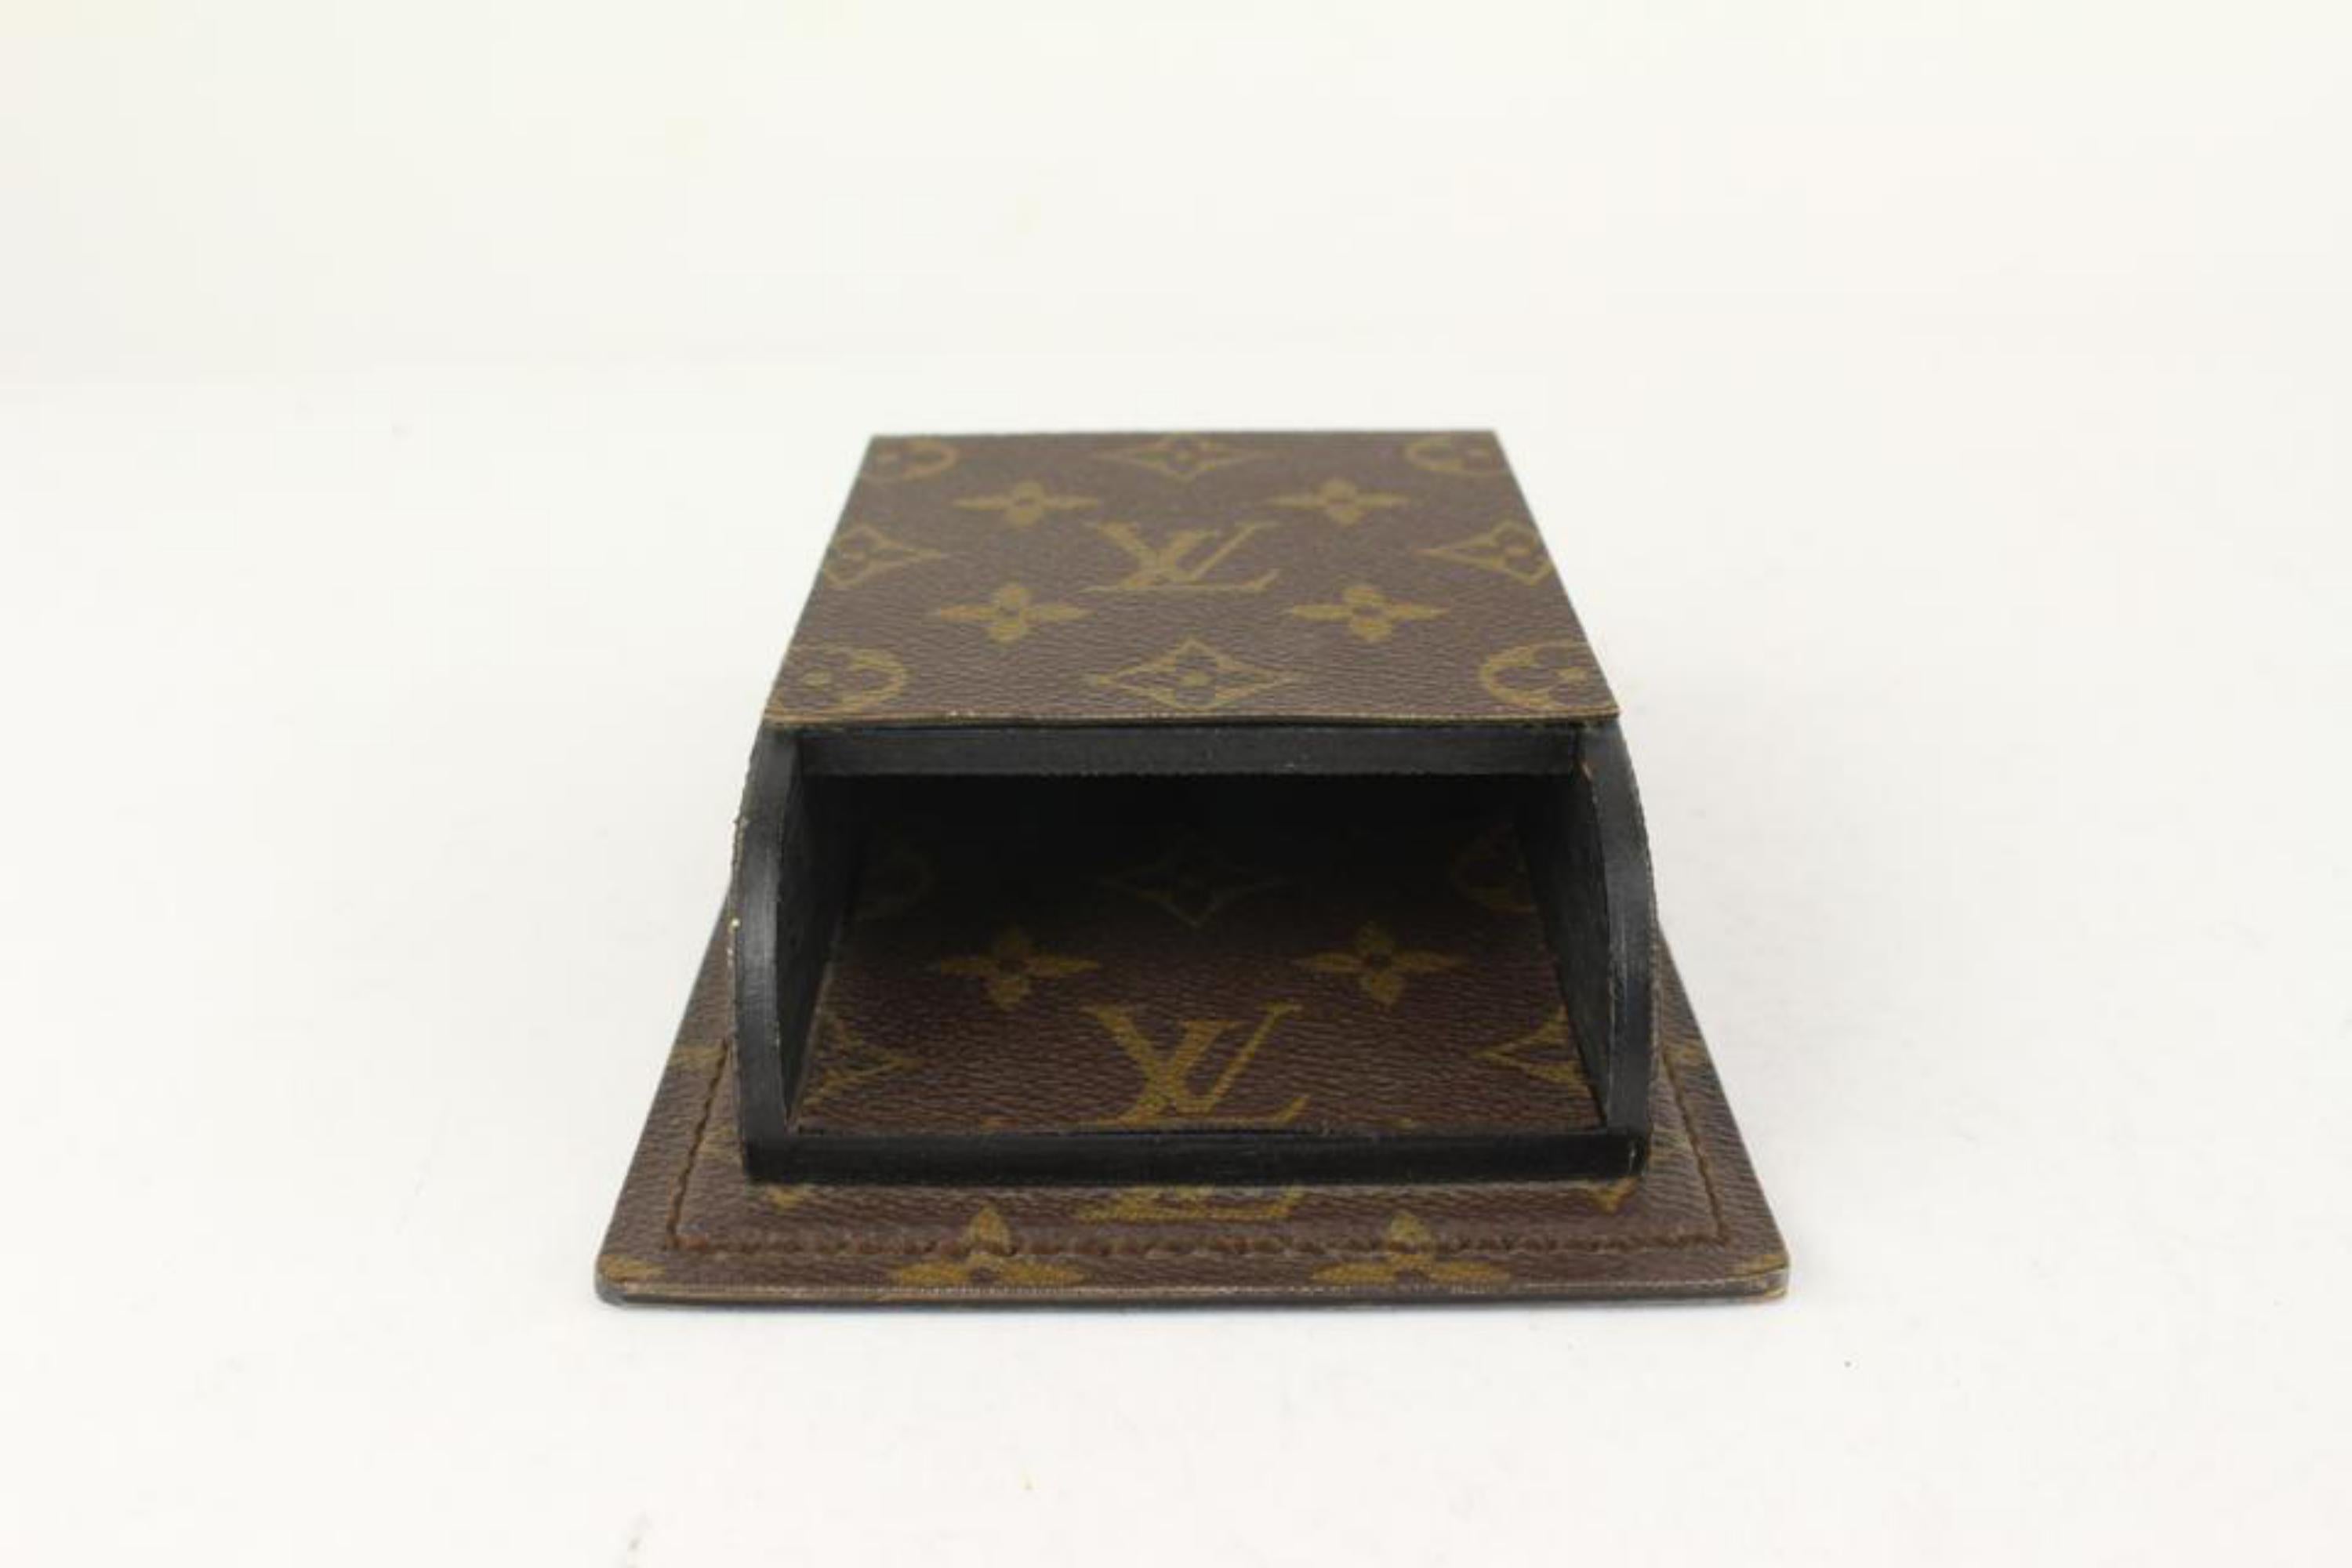 Louis Vuitton Impossible Find Monogram Desk Top Organizer 1122lv12 For Sale 1